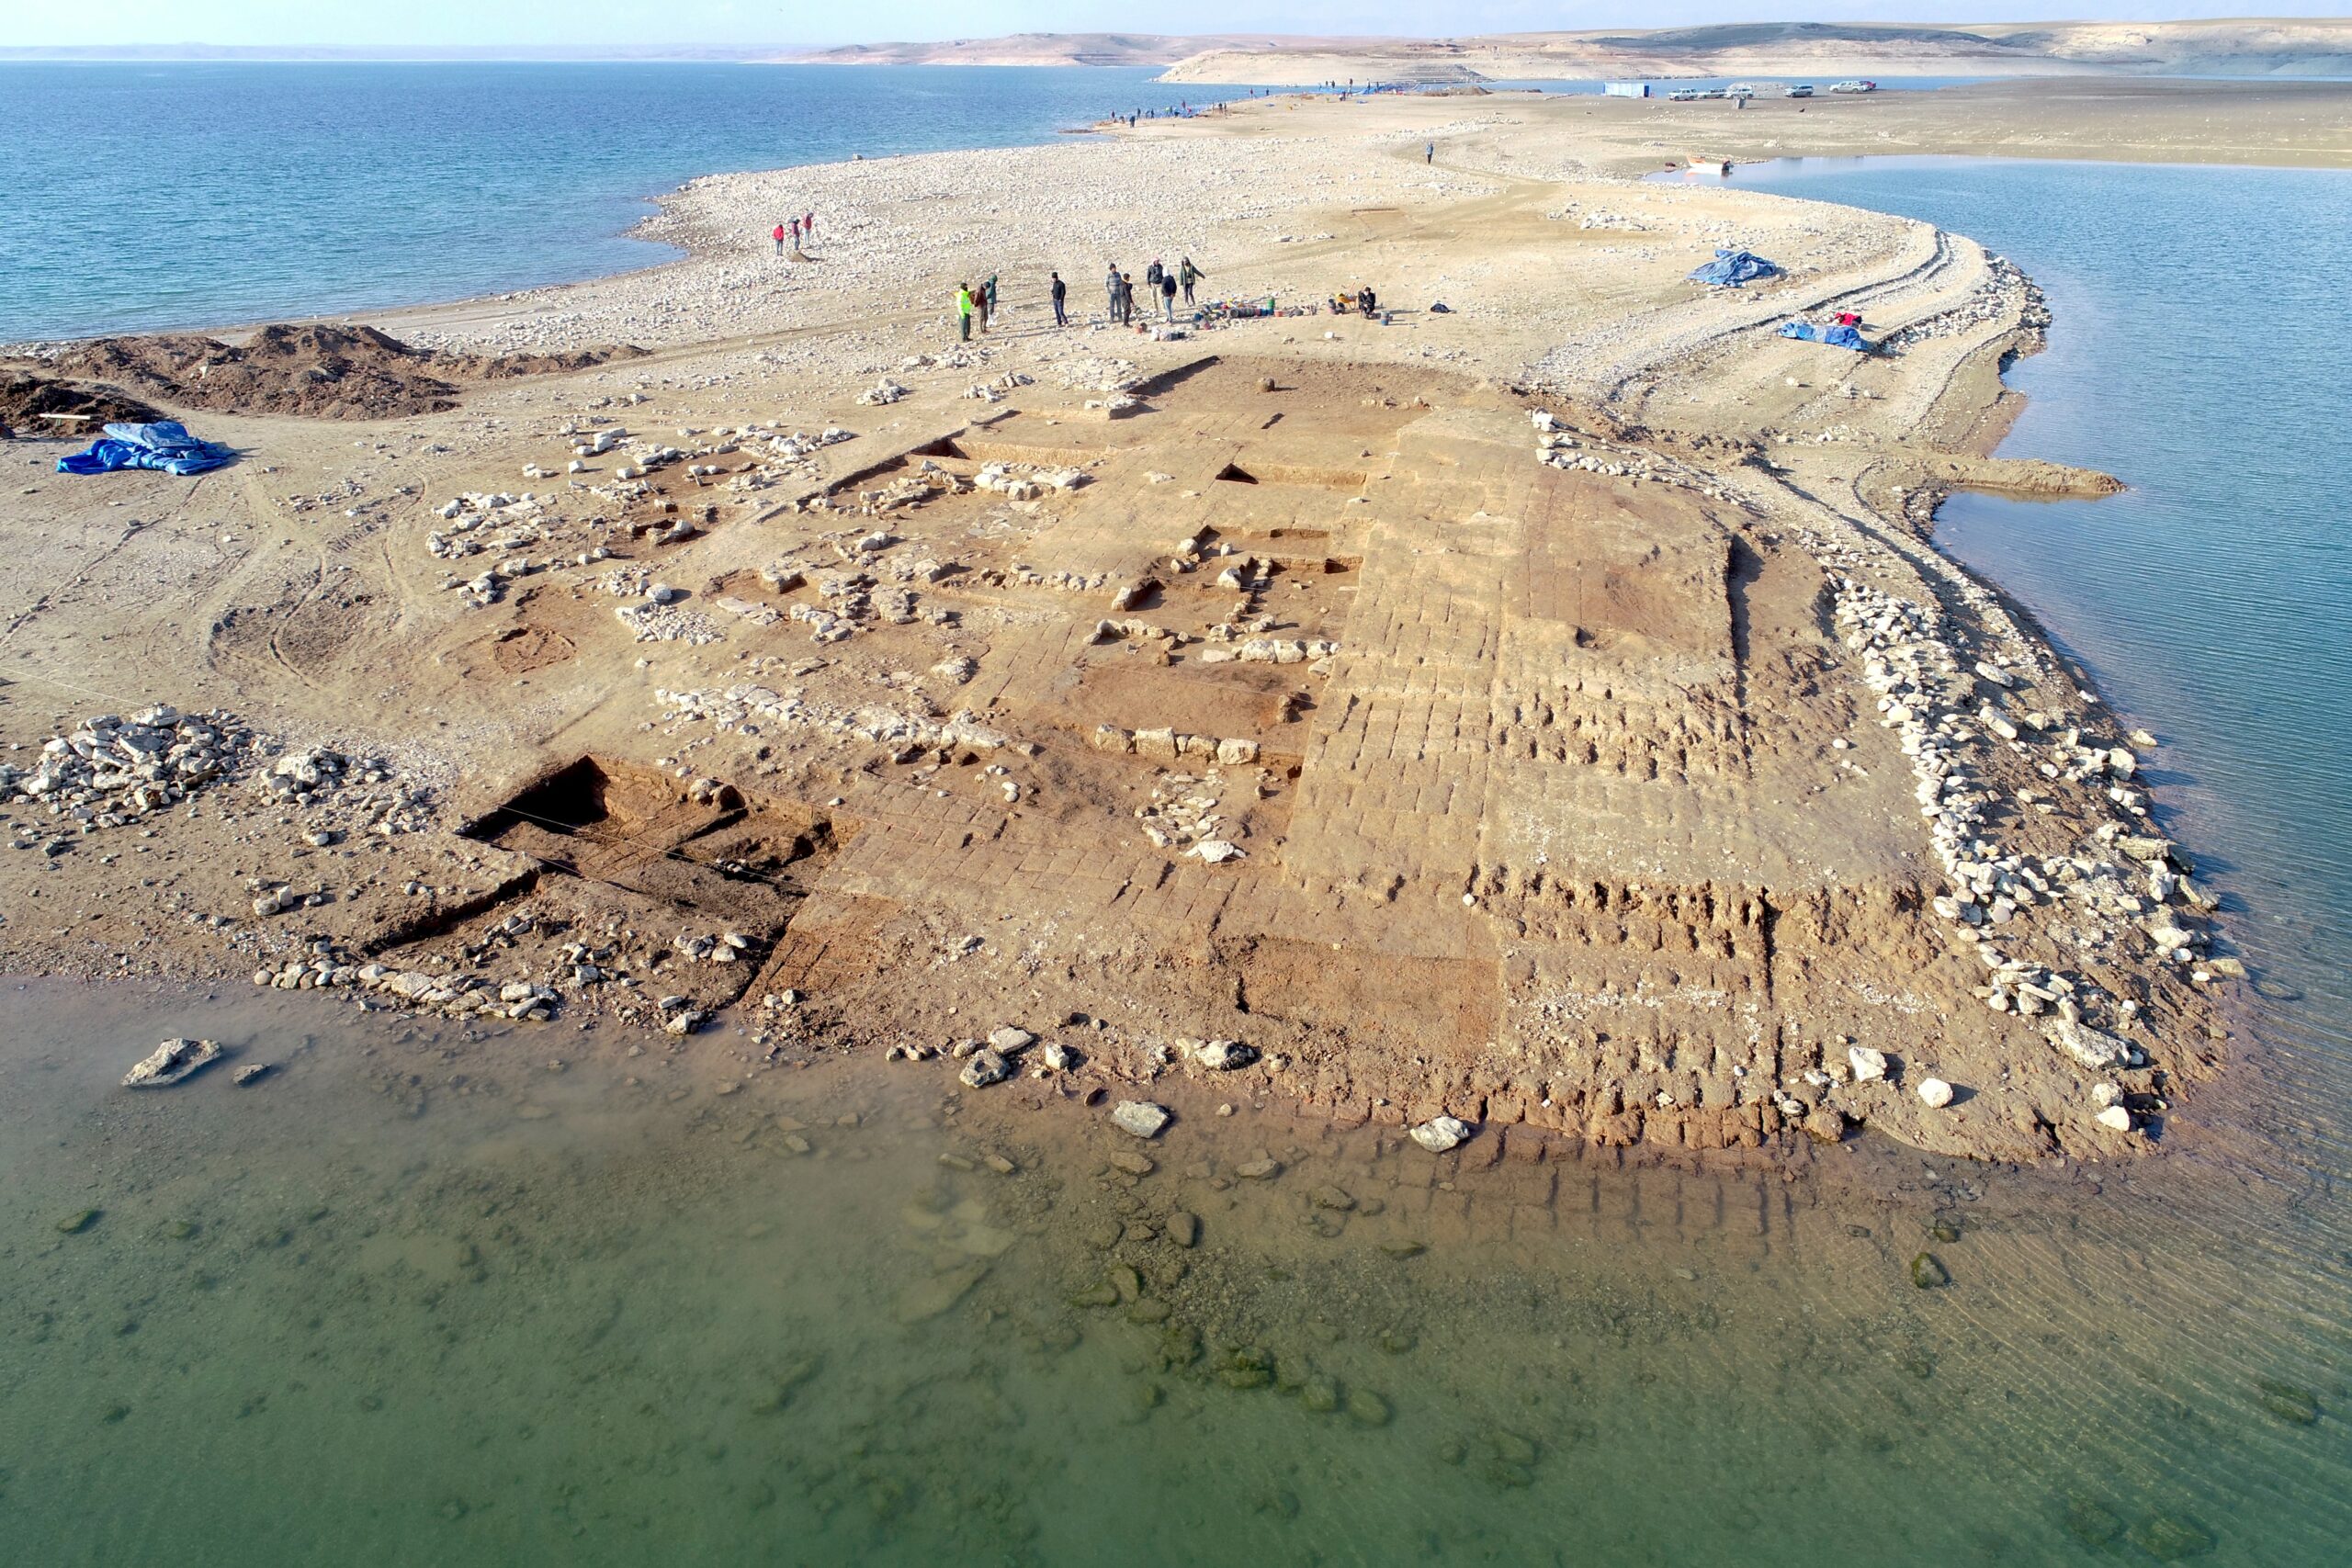 Annunciate le 5 scoperte archeologiche del 2022 candidate all’International Archaeological Discovery Award “Khaled al-Asaad”